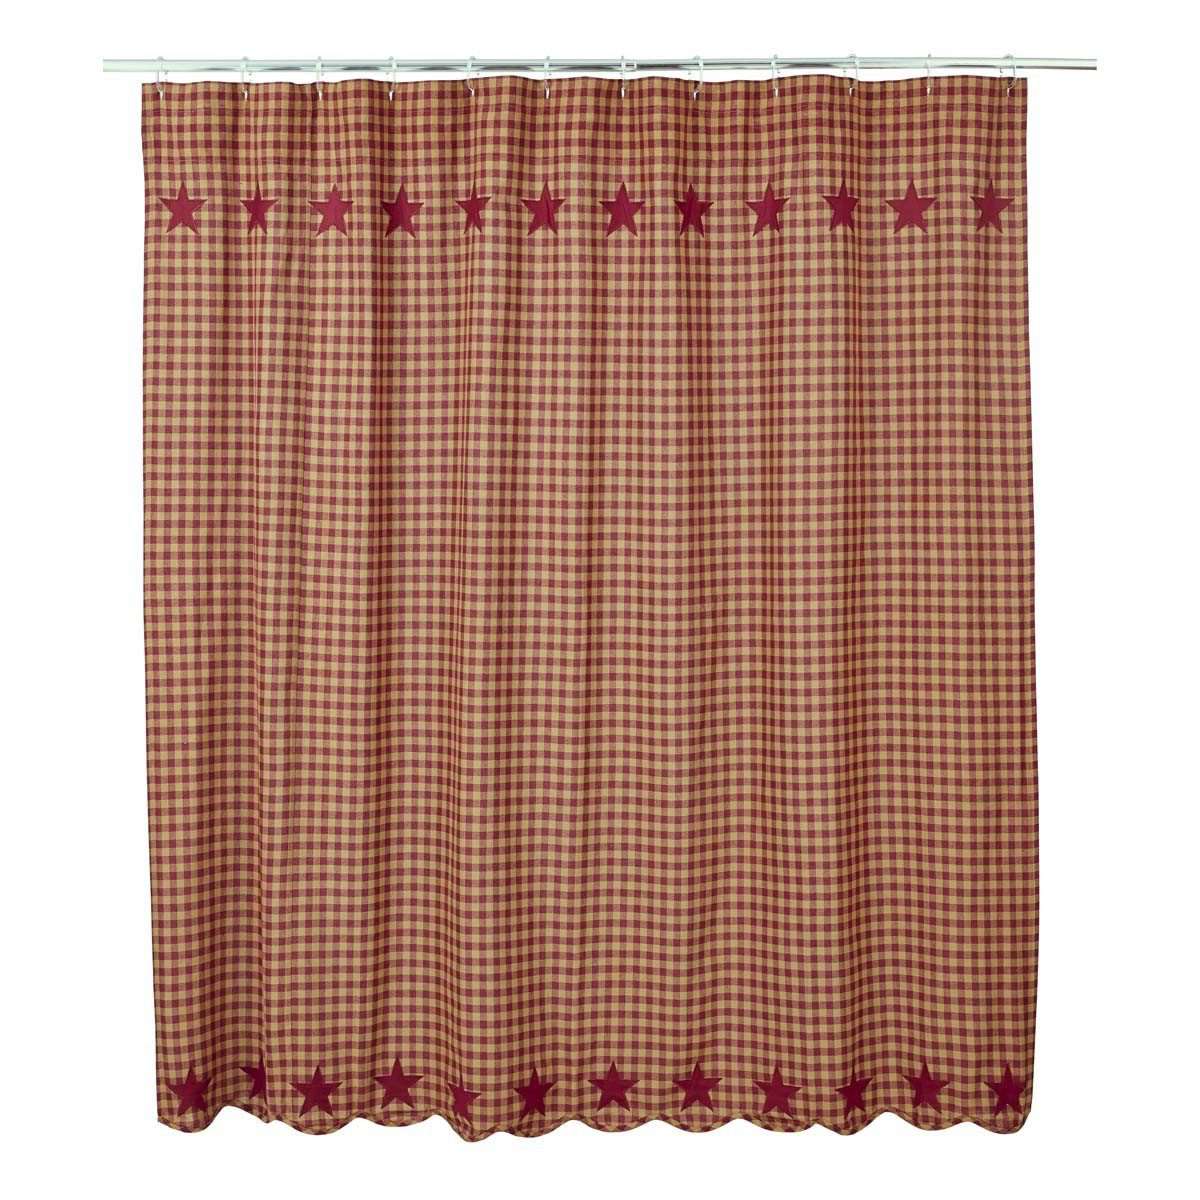 Burgundy Star Scalloped Shower Curtain 72"x72" curtain VHC Brands 